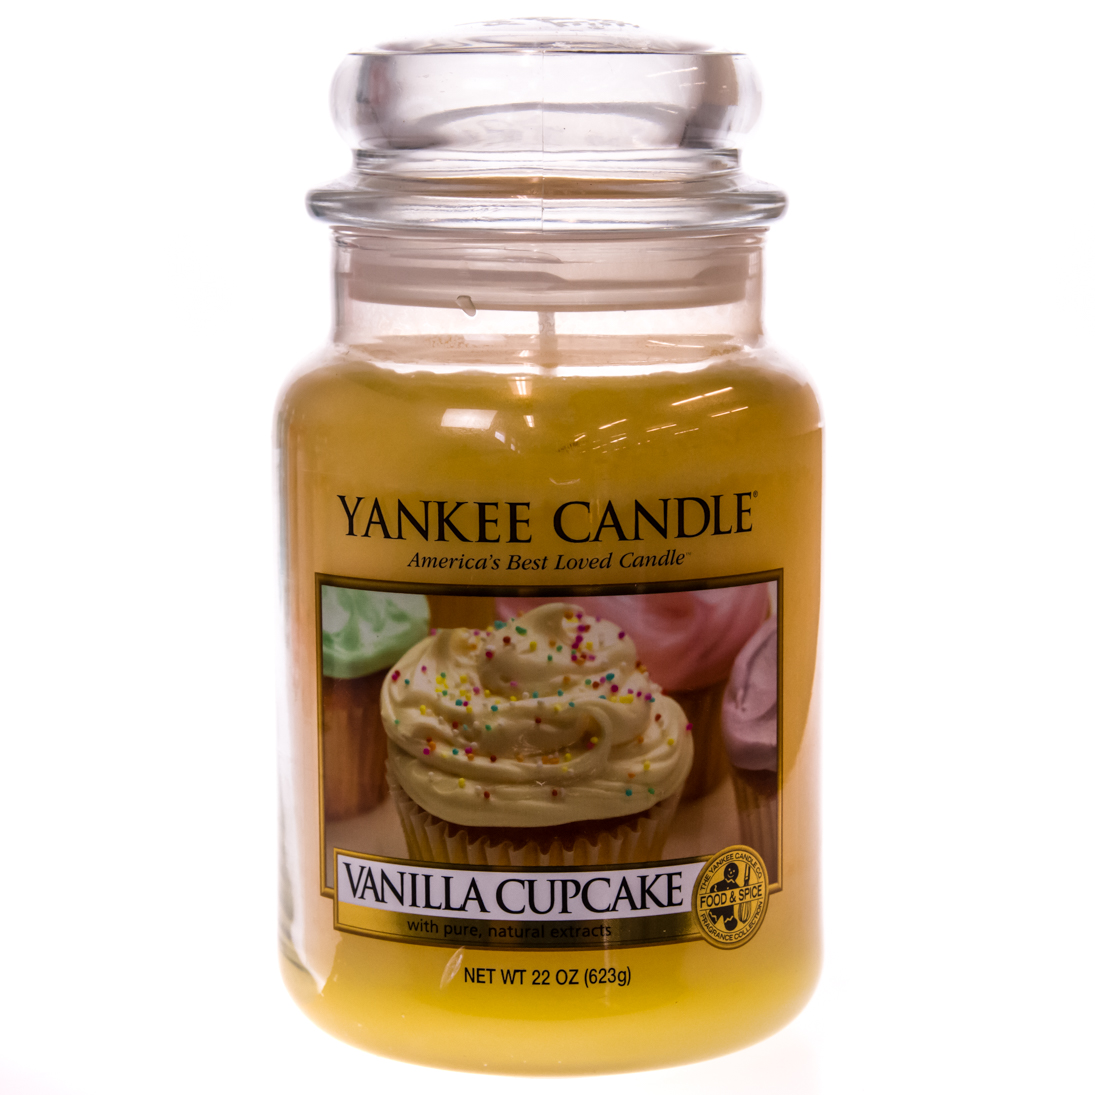 Yankee Candle Vanilla Cupcake Large Jar Candle - Cracker Barrel